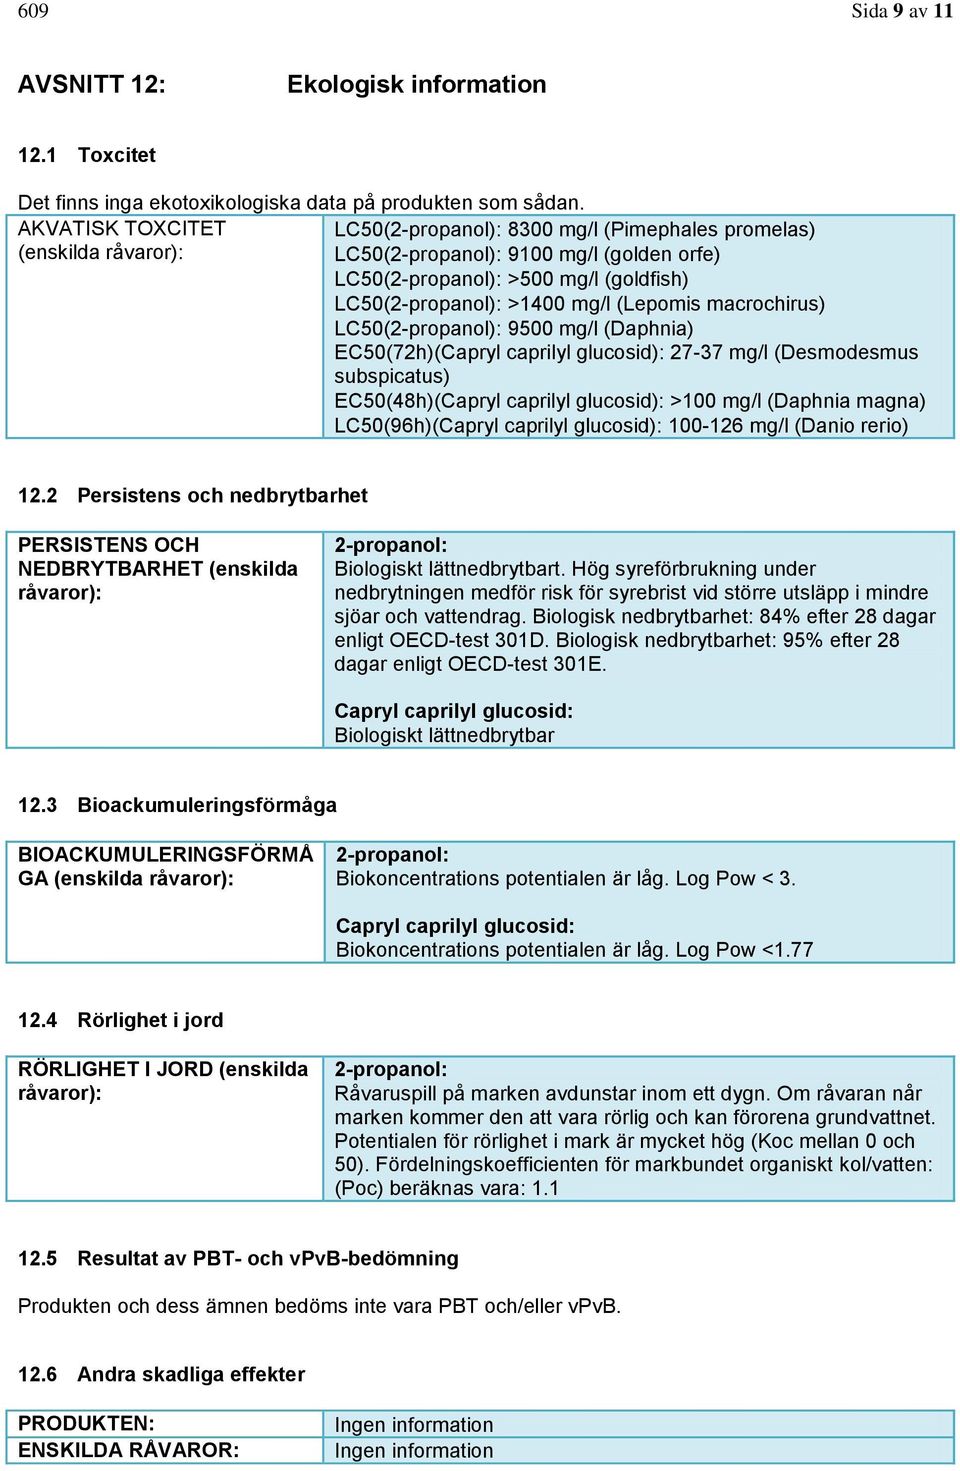 (Lepomis macrochirus) LC50(2-propanol): 9500 mg/l (Daphnia) EC50(72h)(Capryl caprilyl glucosid): 27-37 mg/l (Desmodesmus subspicatus) EC50(48h)(Capryl caprilyl glucosid): >100 mg/l (Daphnia magna)